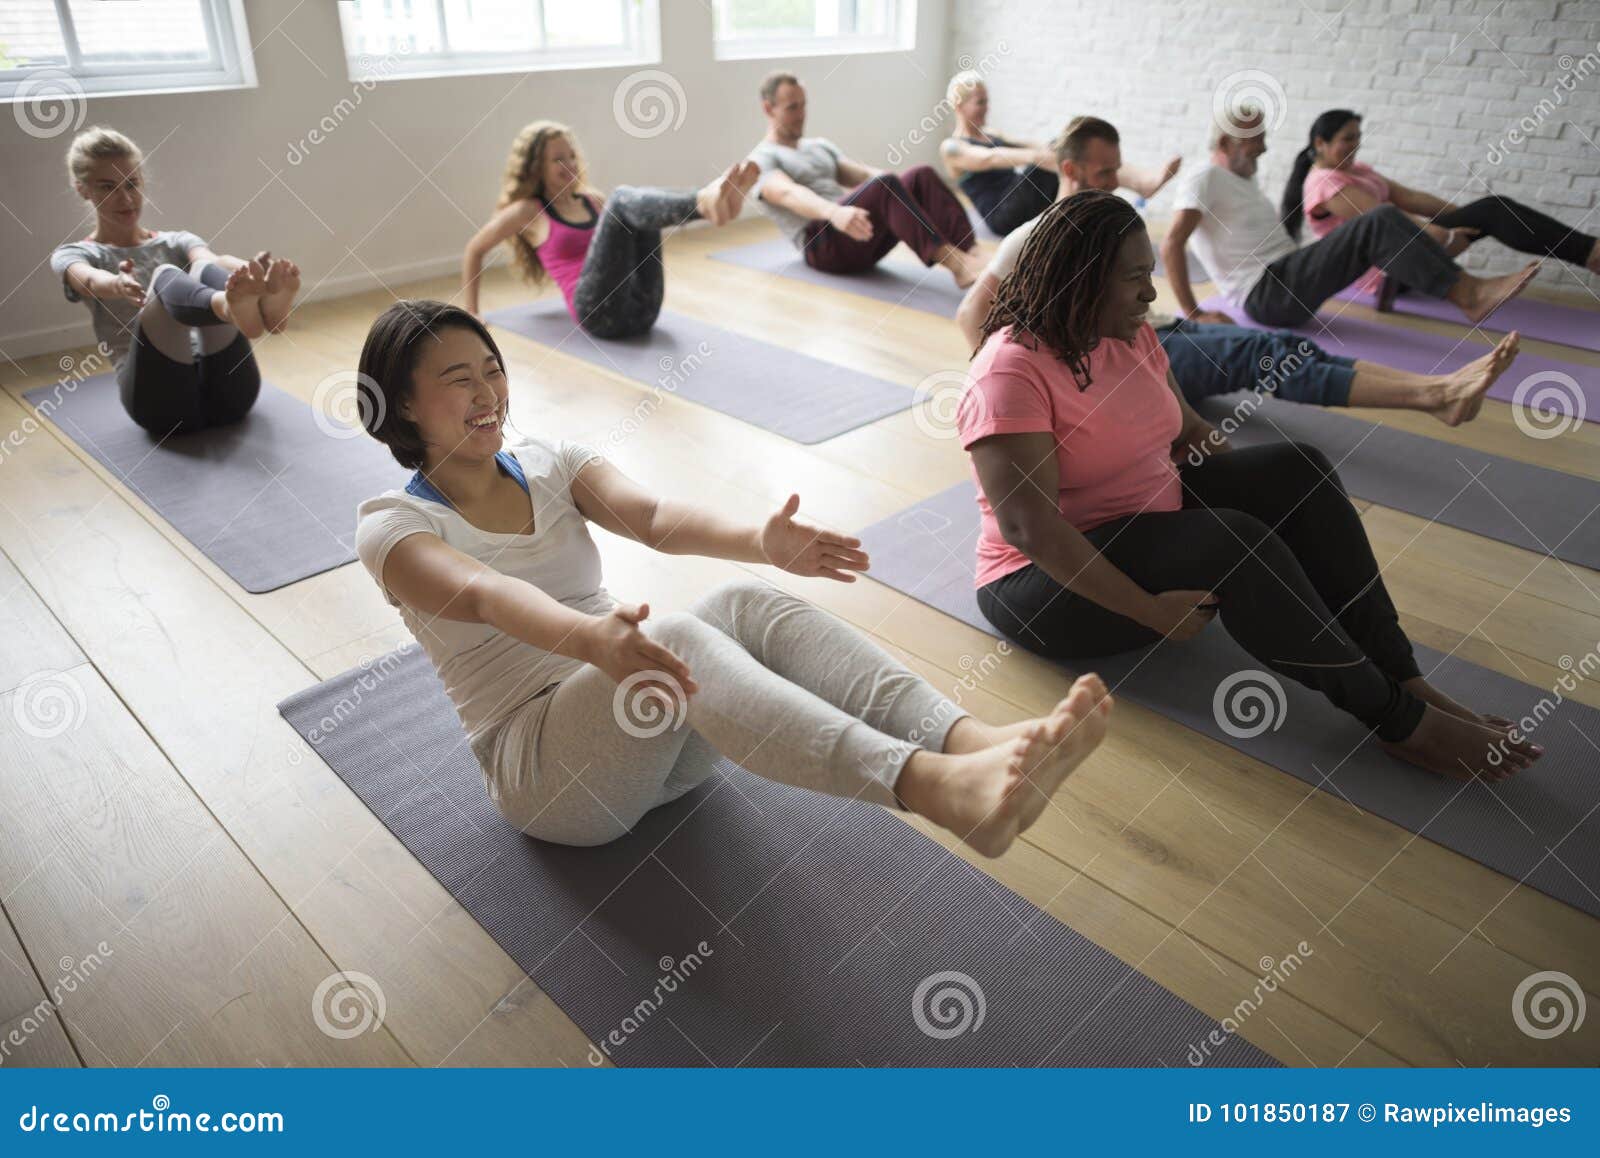 yoga class concept